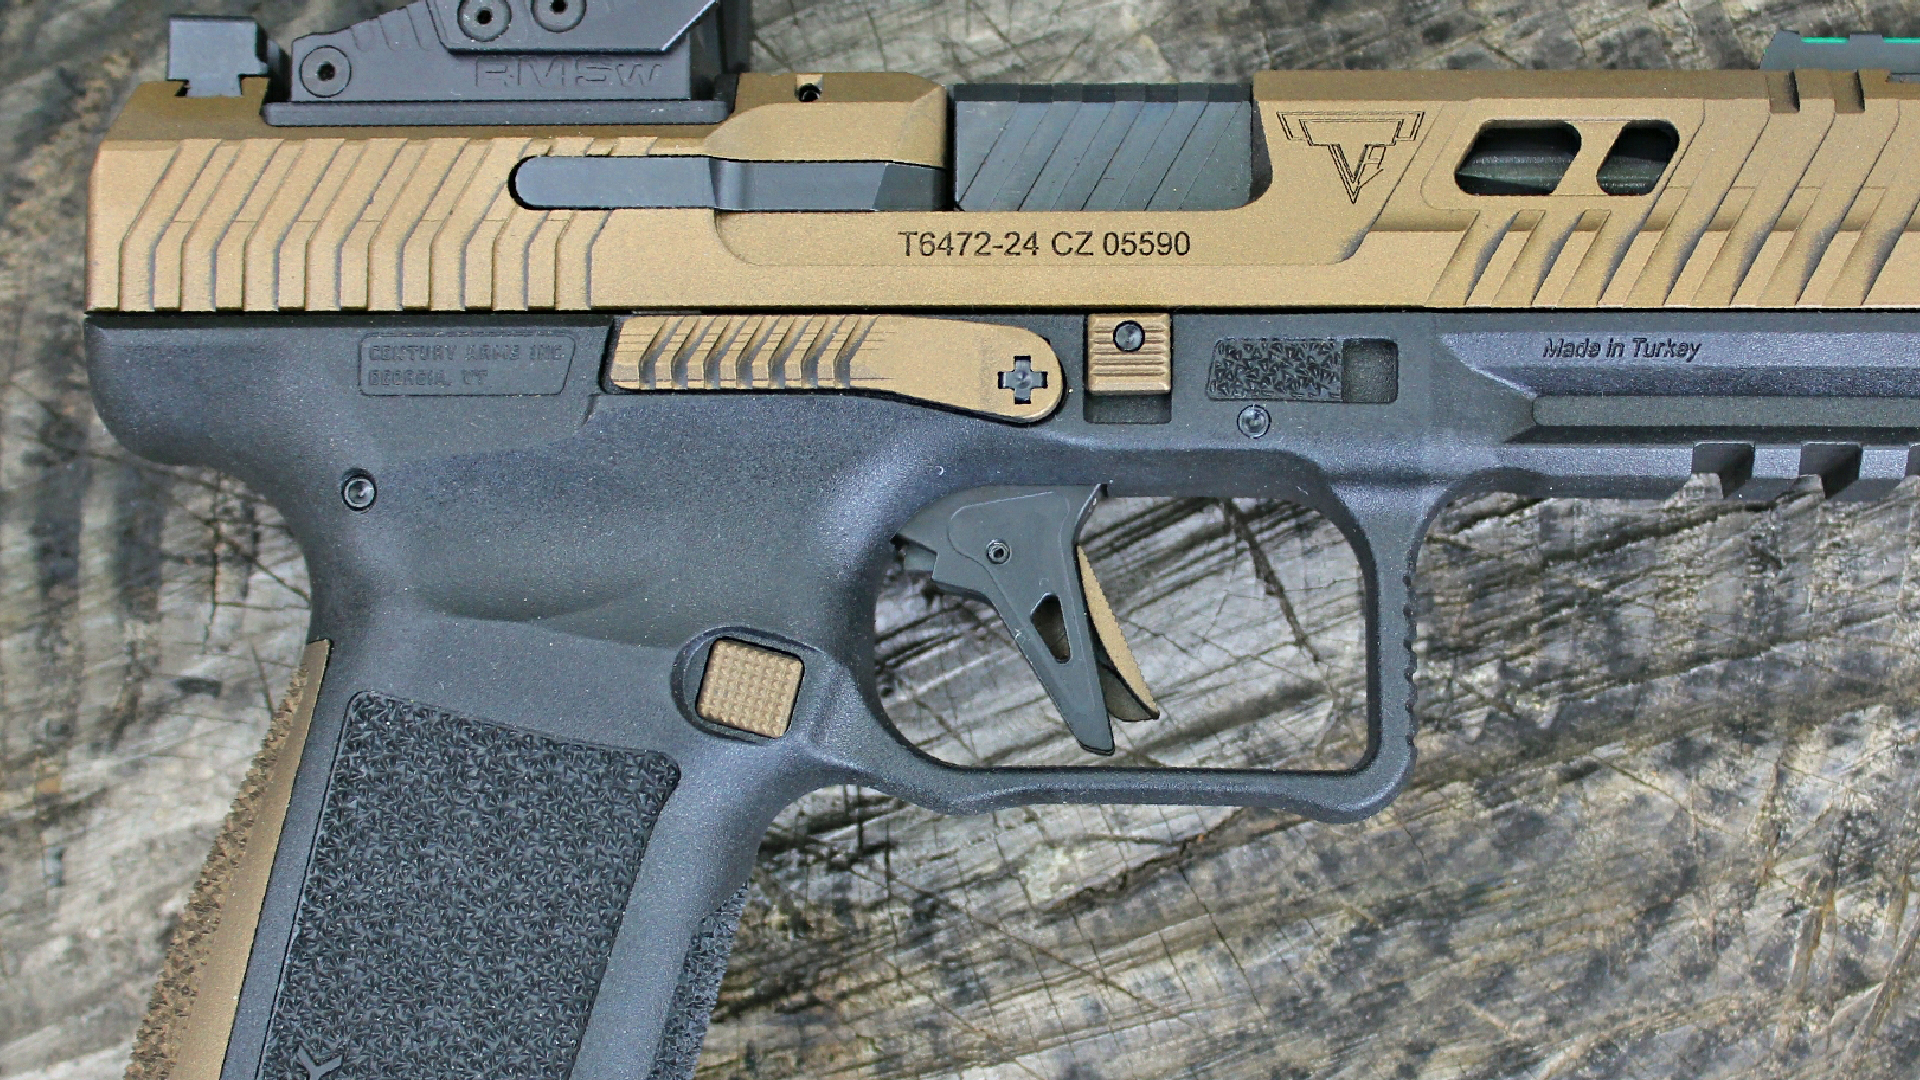 Canik TTI Combat 9 mm pistol right side trigger flat face